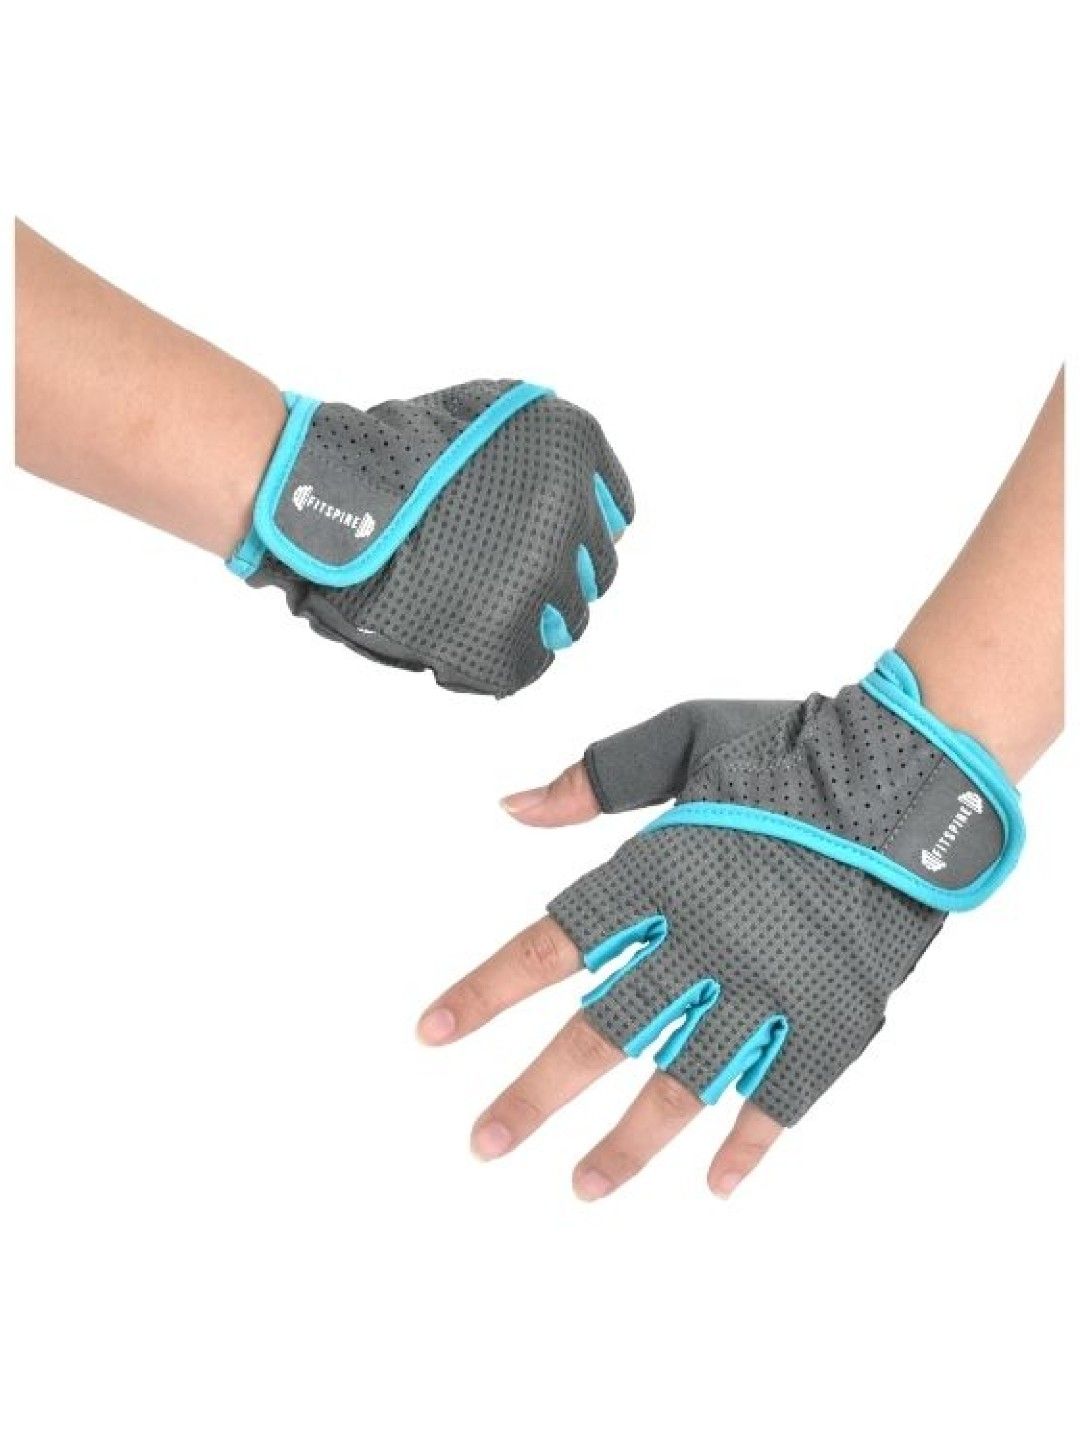 Sunbeams Lifestyle Fitspire Training Gloves Microfiber Workout Equipment (Women)